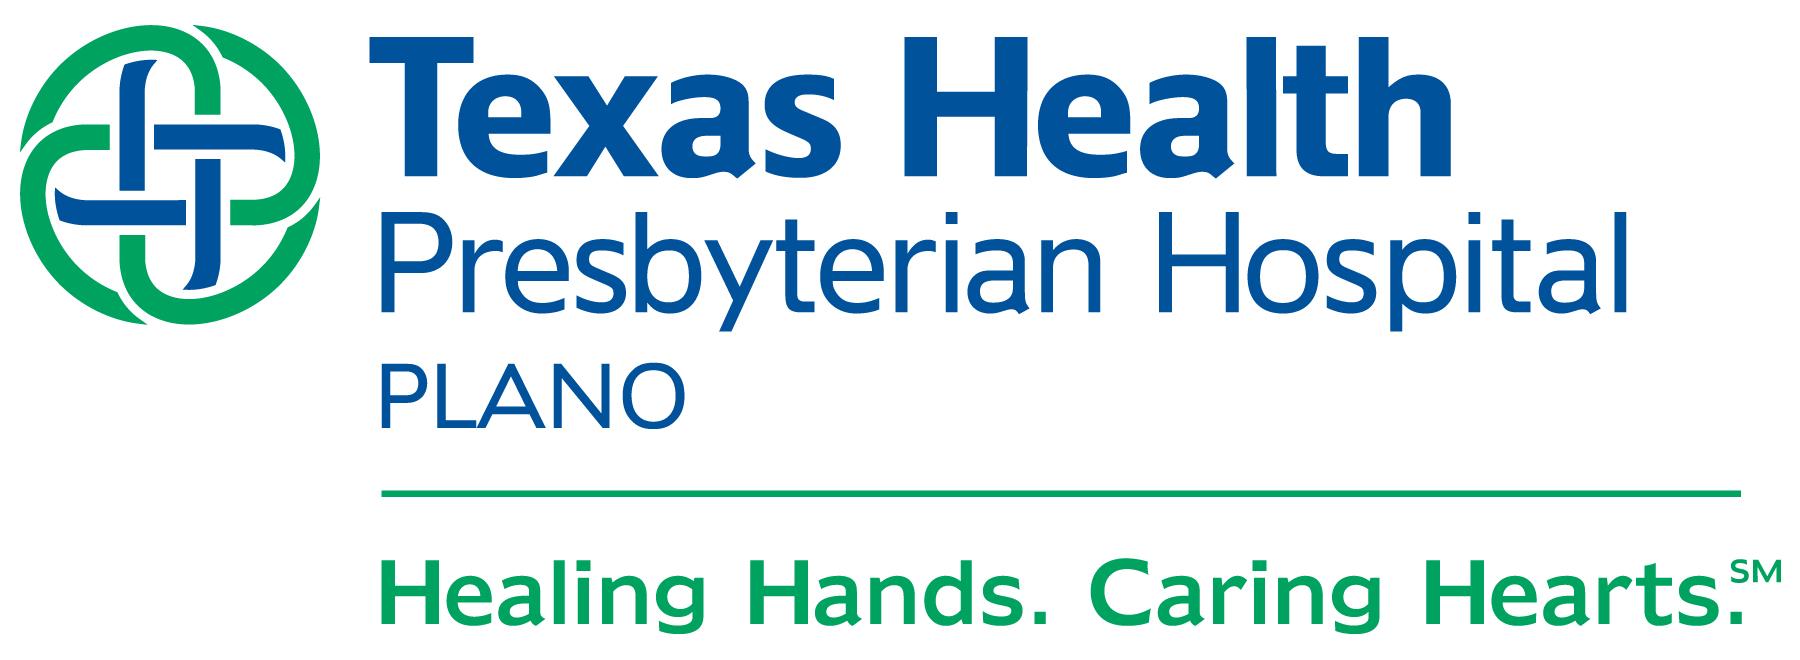 Texas Health Presbyterian Hospital Plano